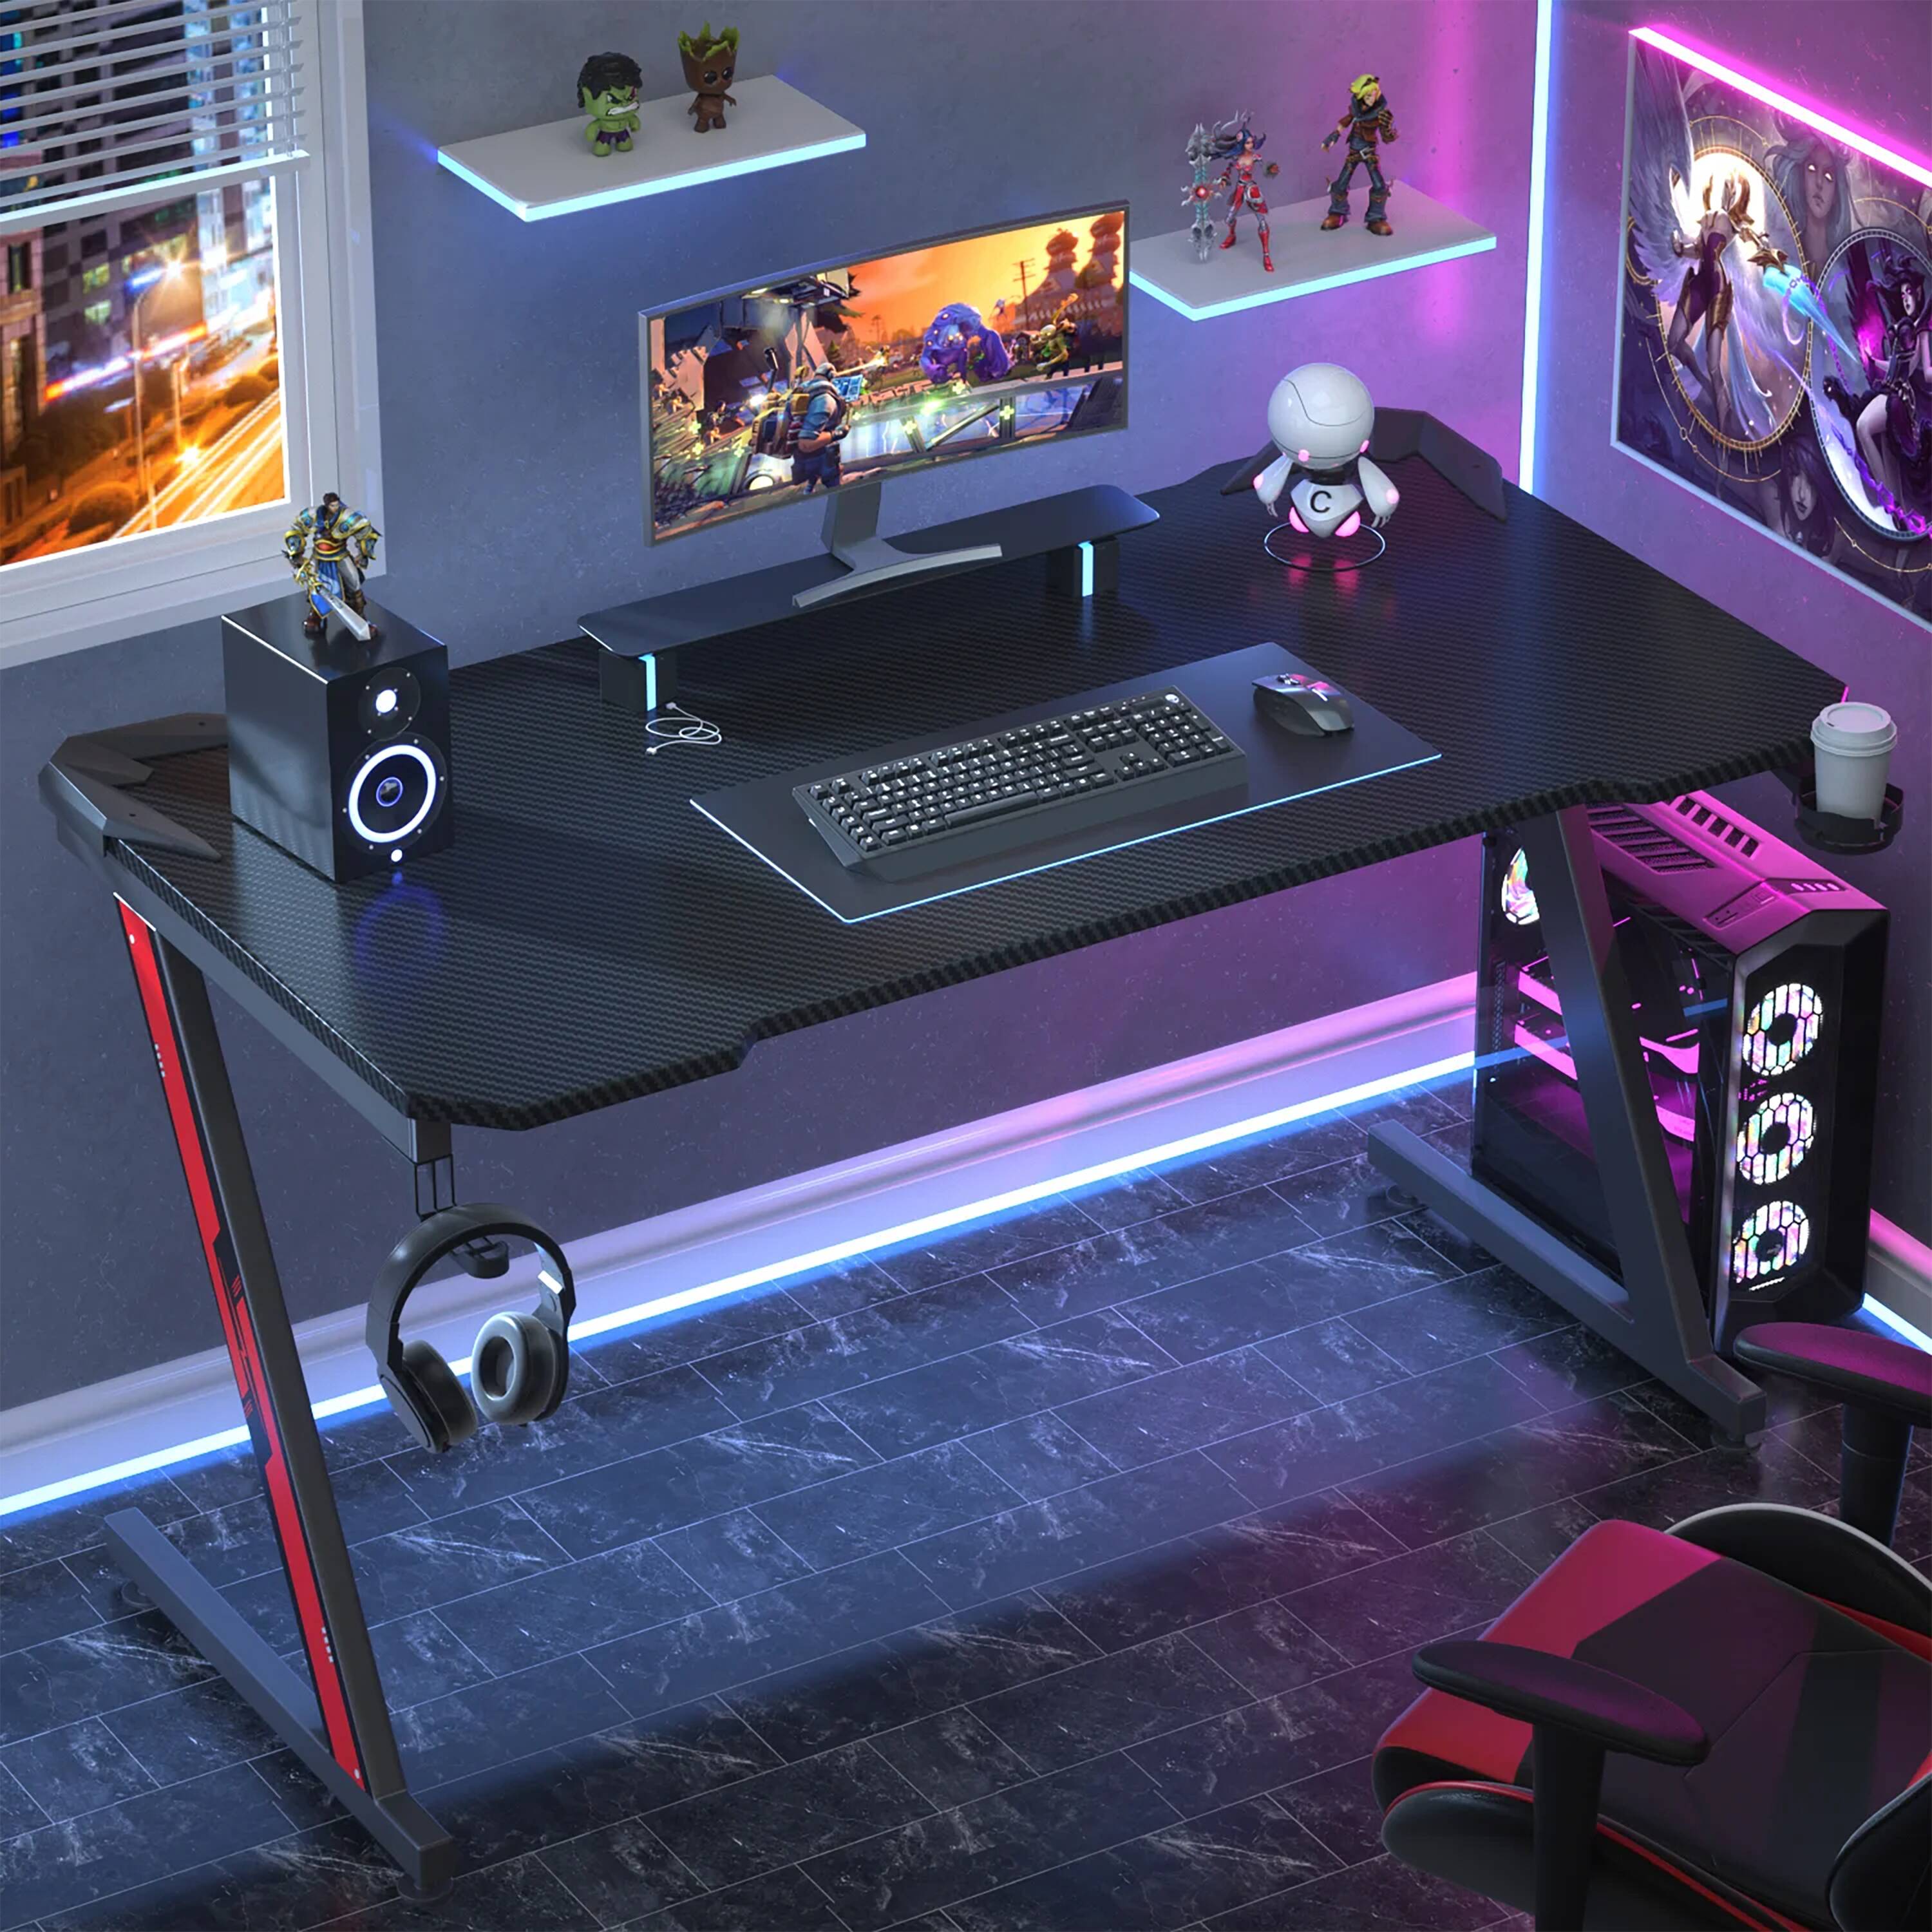 Black Gaming Desk with LED Lights, 55 Computer Desk with Hutch